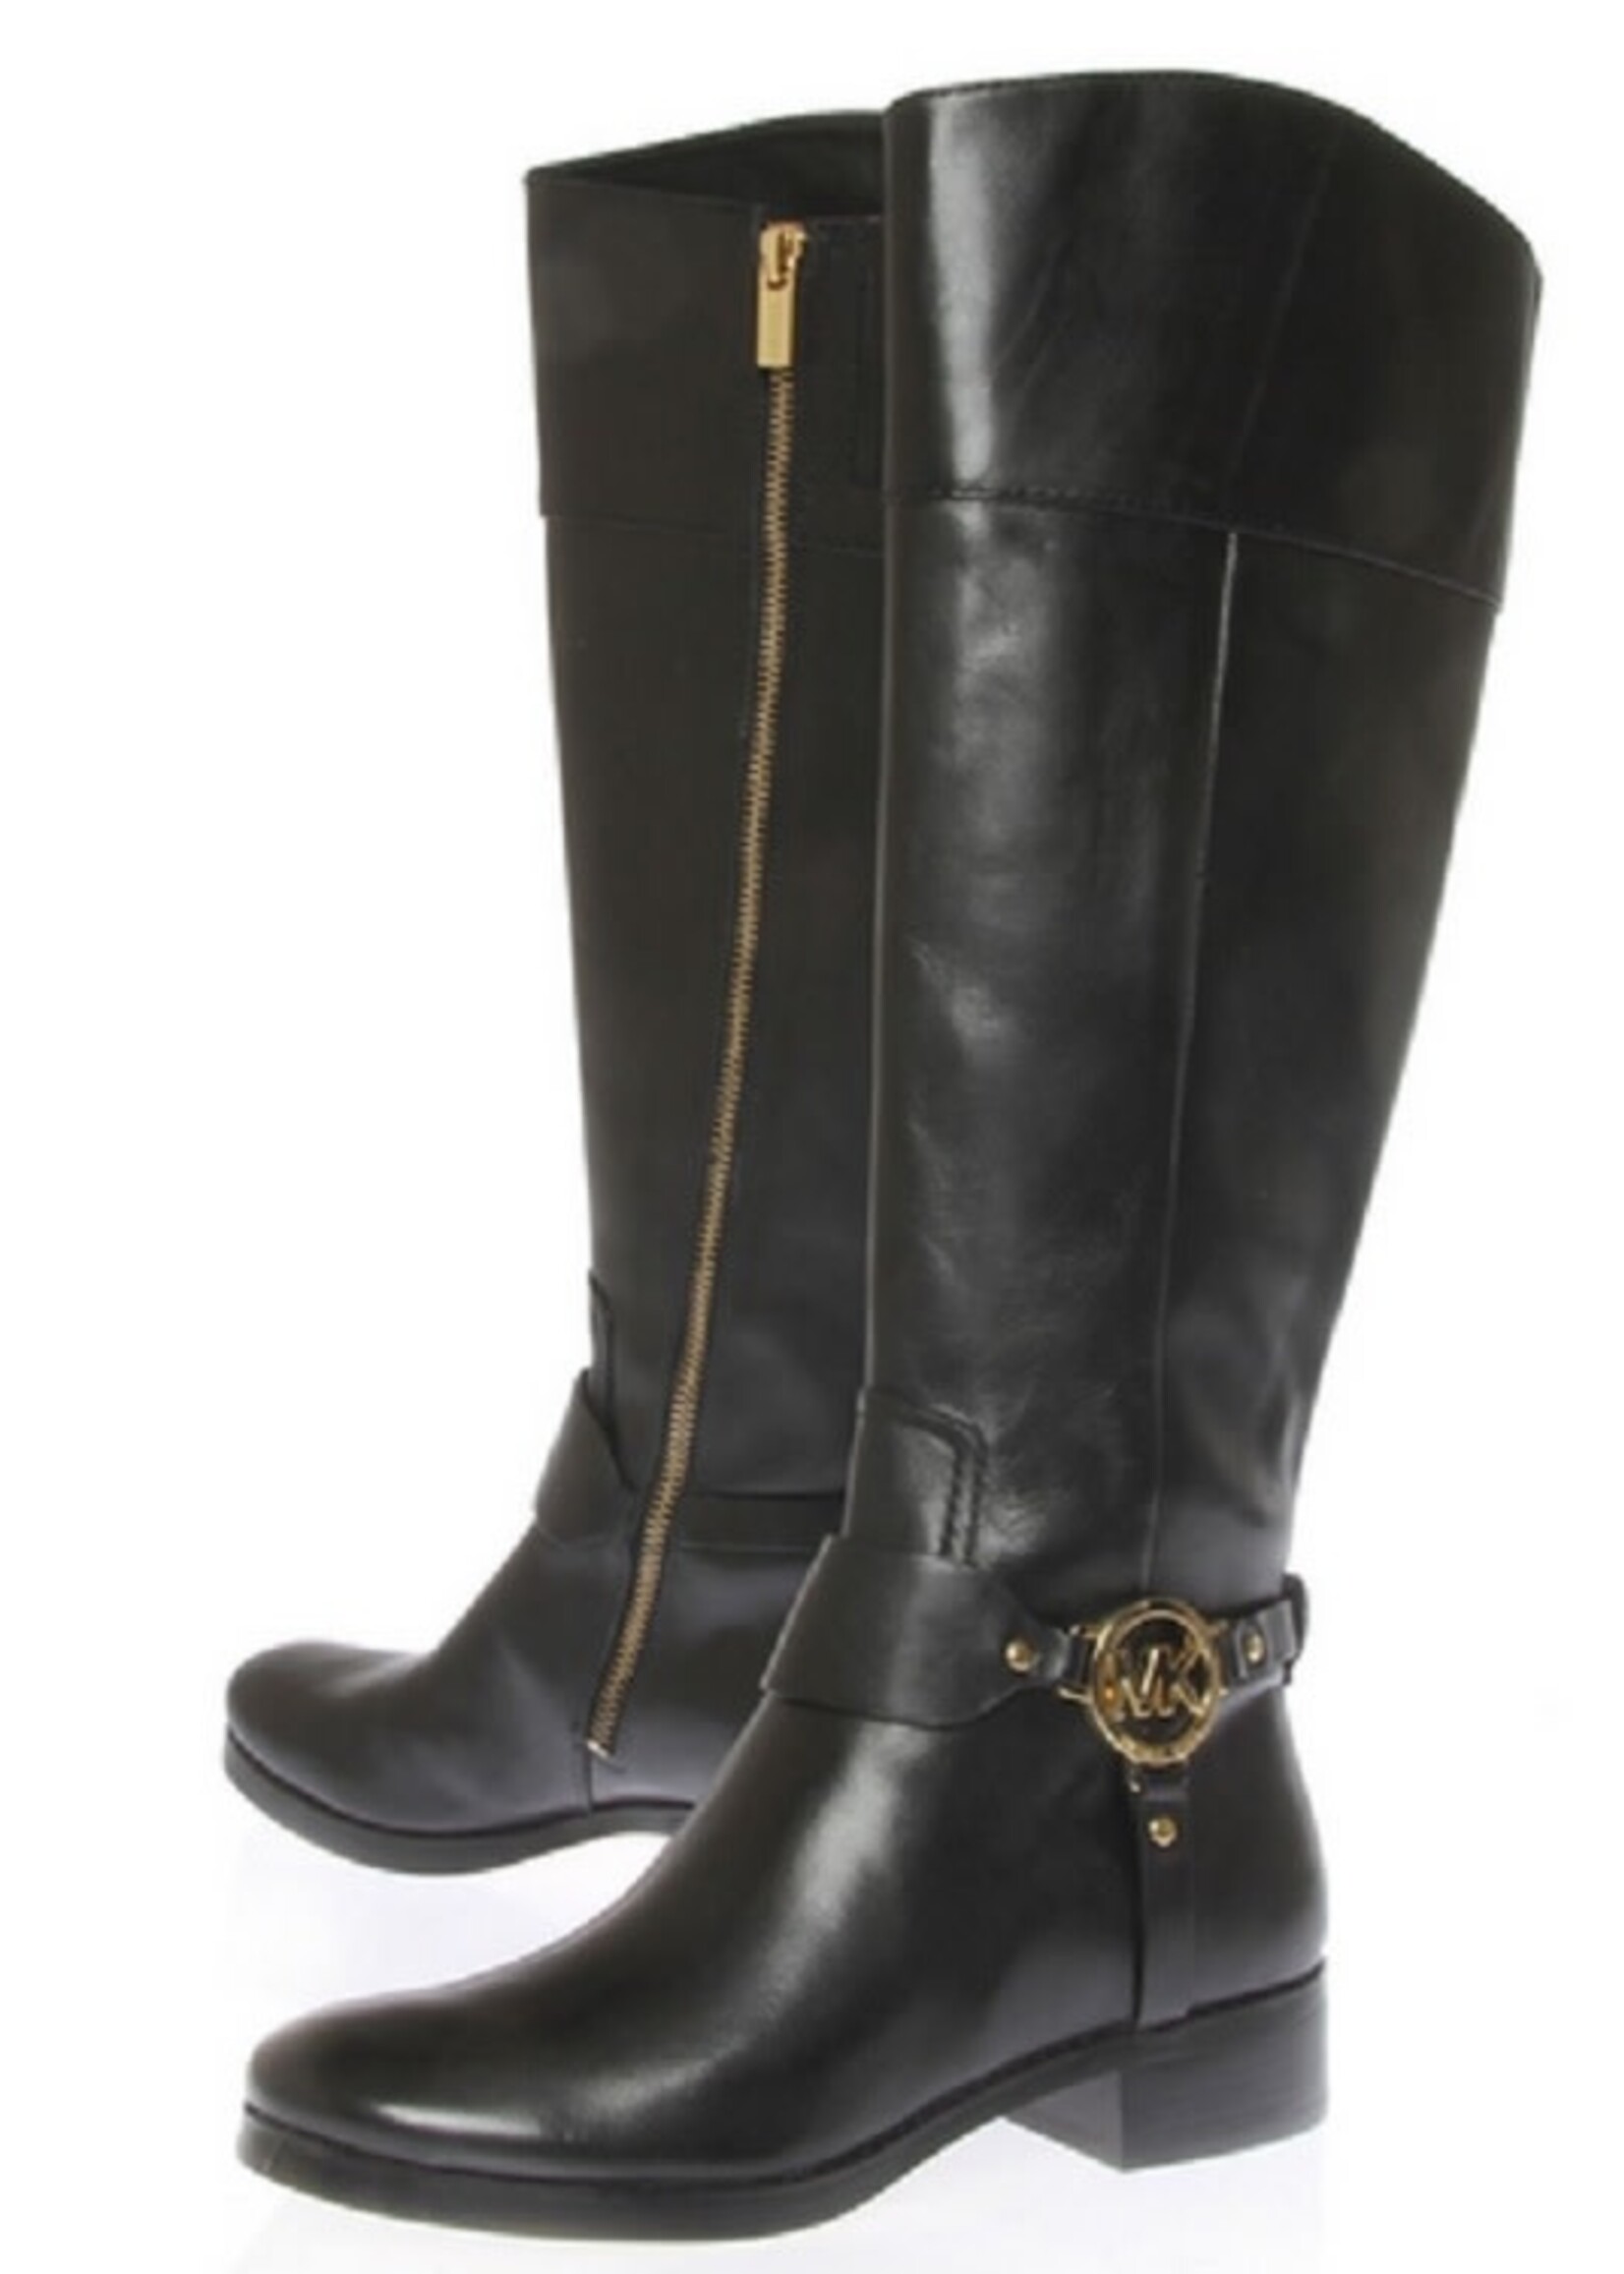 Michael Kors Michael Kors Black Leather Boots, 5